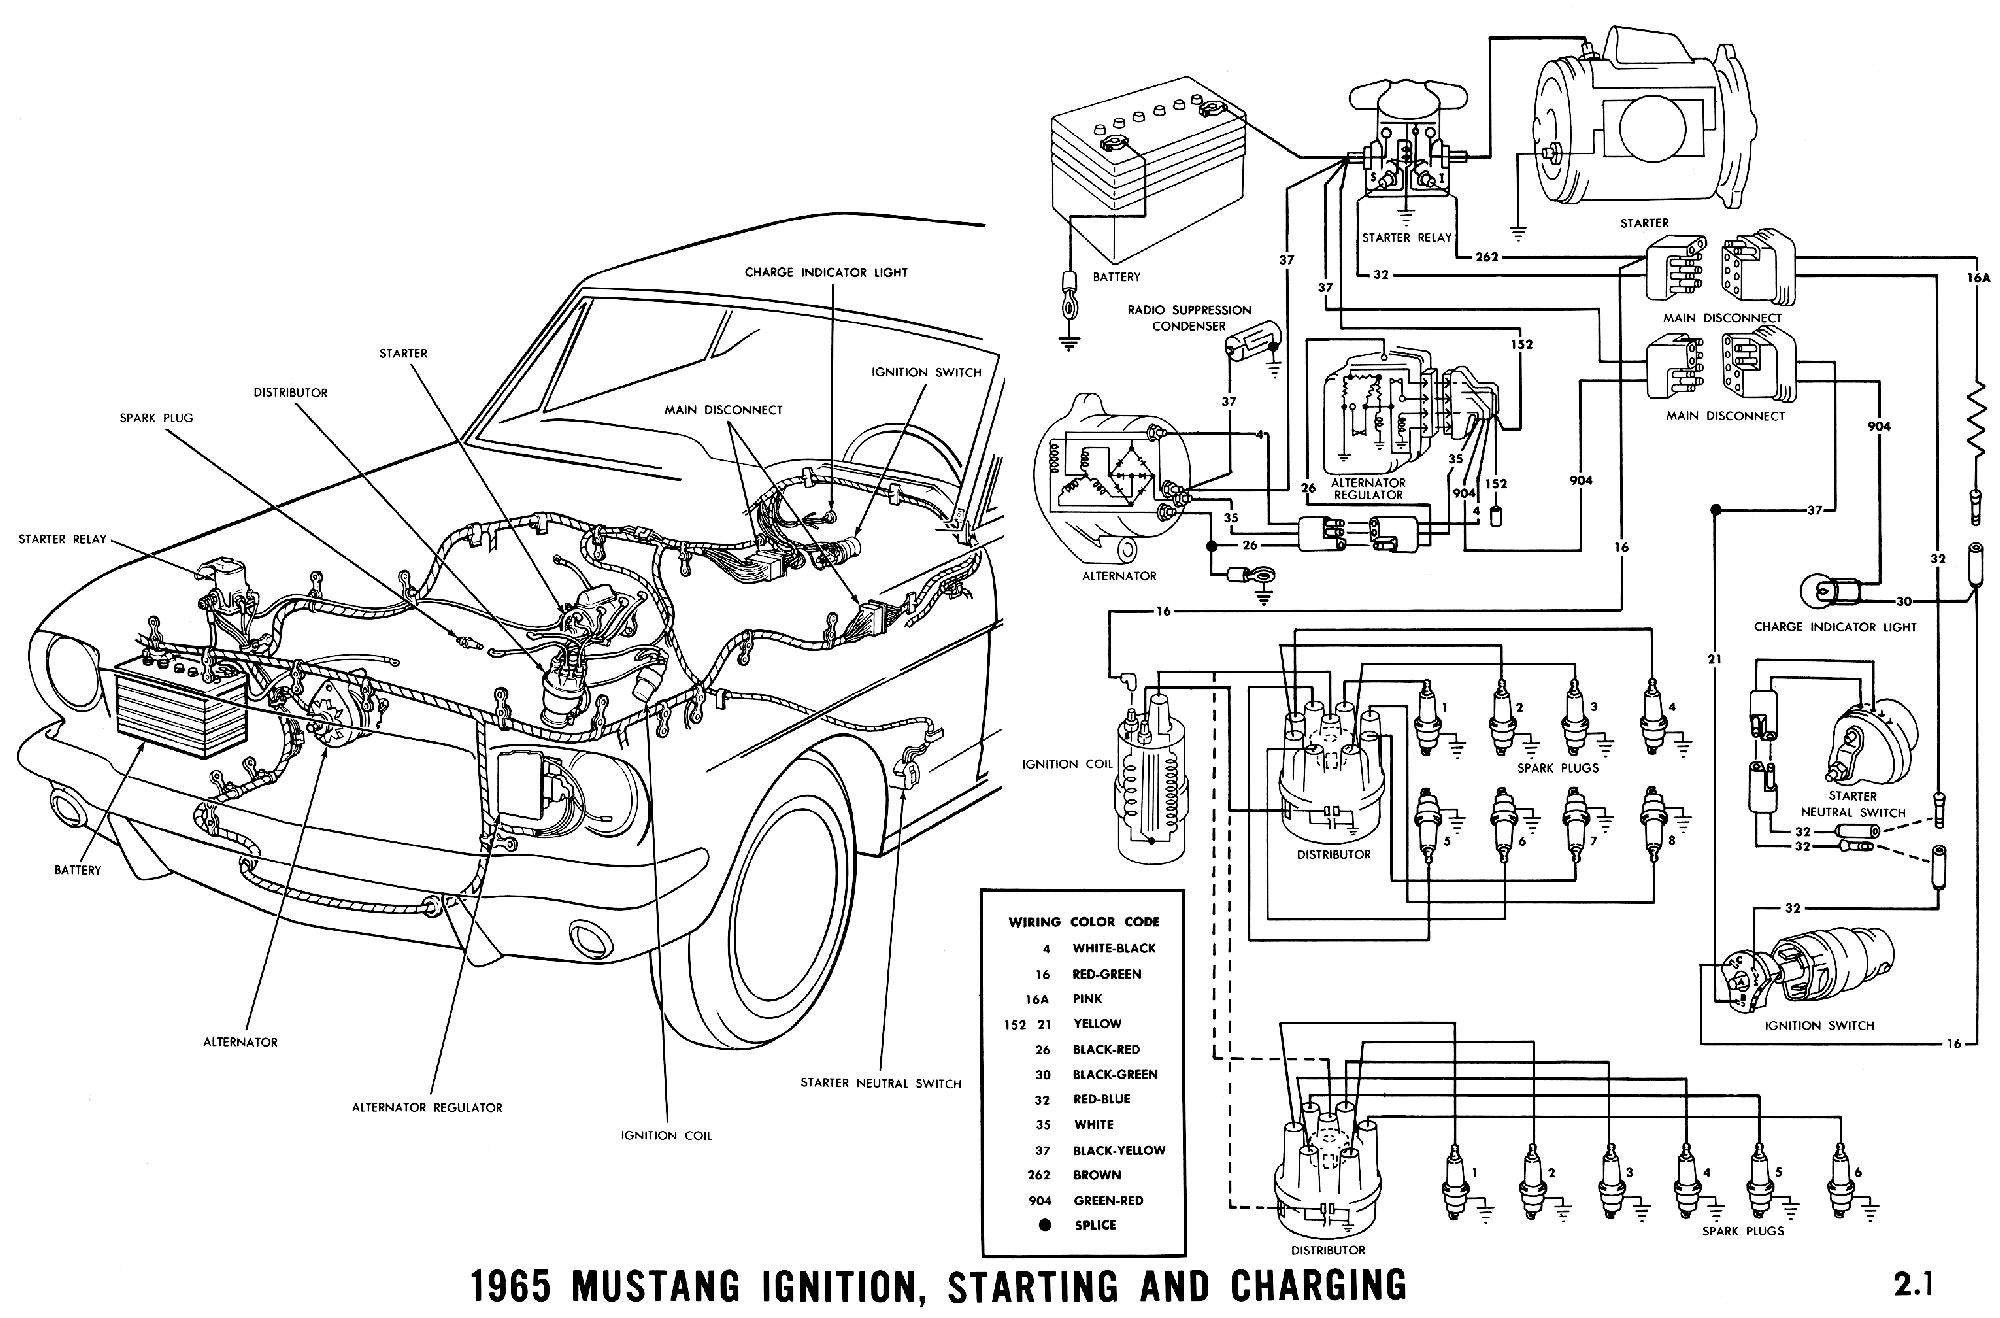 1968 Mustang Engine Wiring Diagram 1965 Mustang Wiring Diagrams Average Joe Restoration Brilliant ford Of 1968 Mustang Engine Wiring Diagram